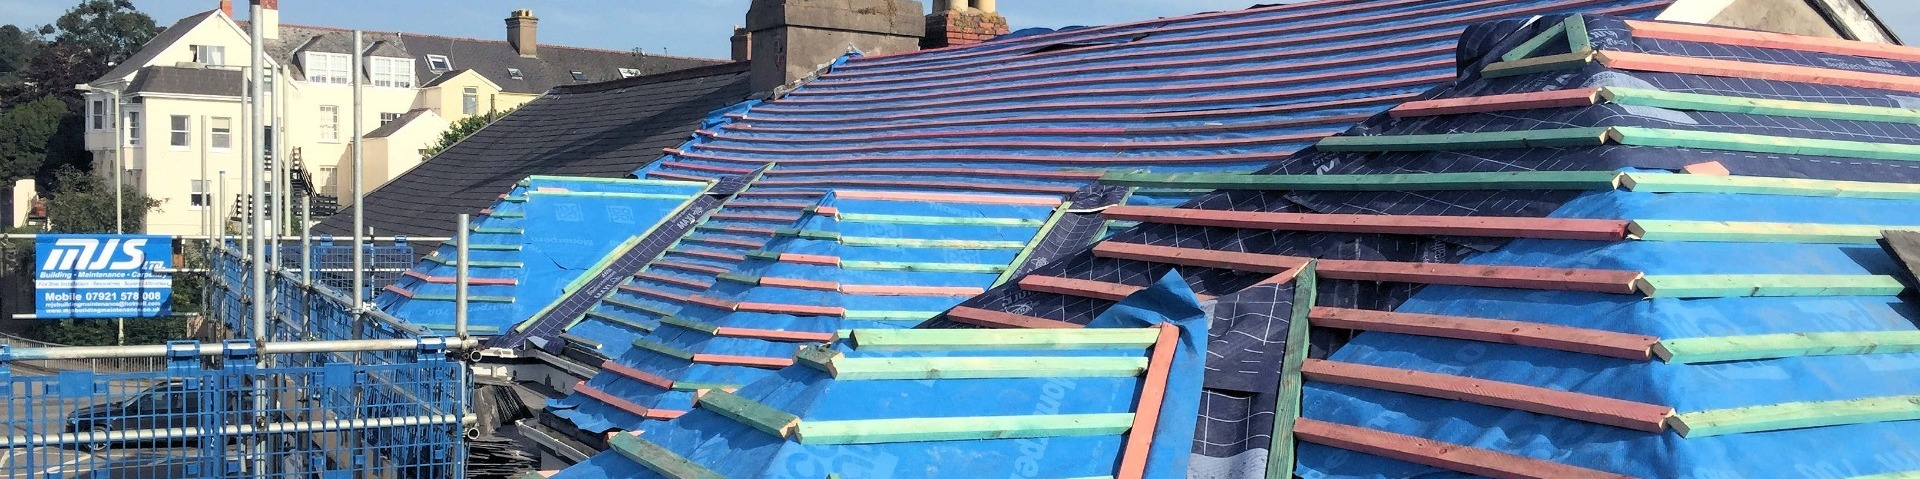 Roofing repair and refurbishment in Barnstaple North Devon